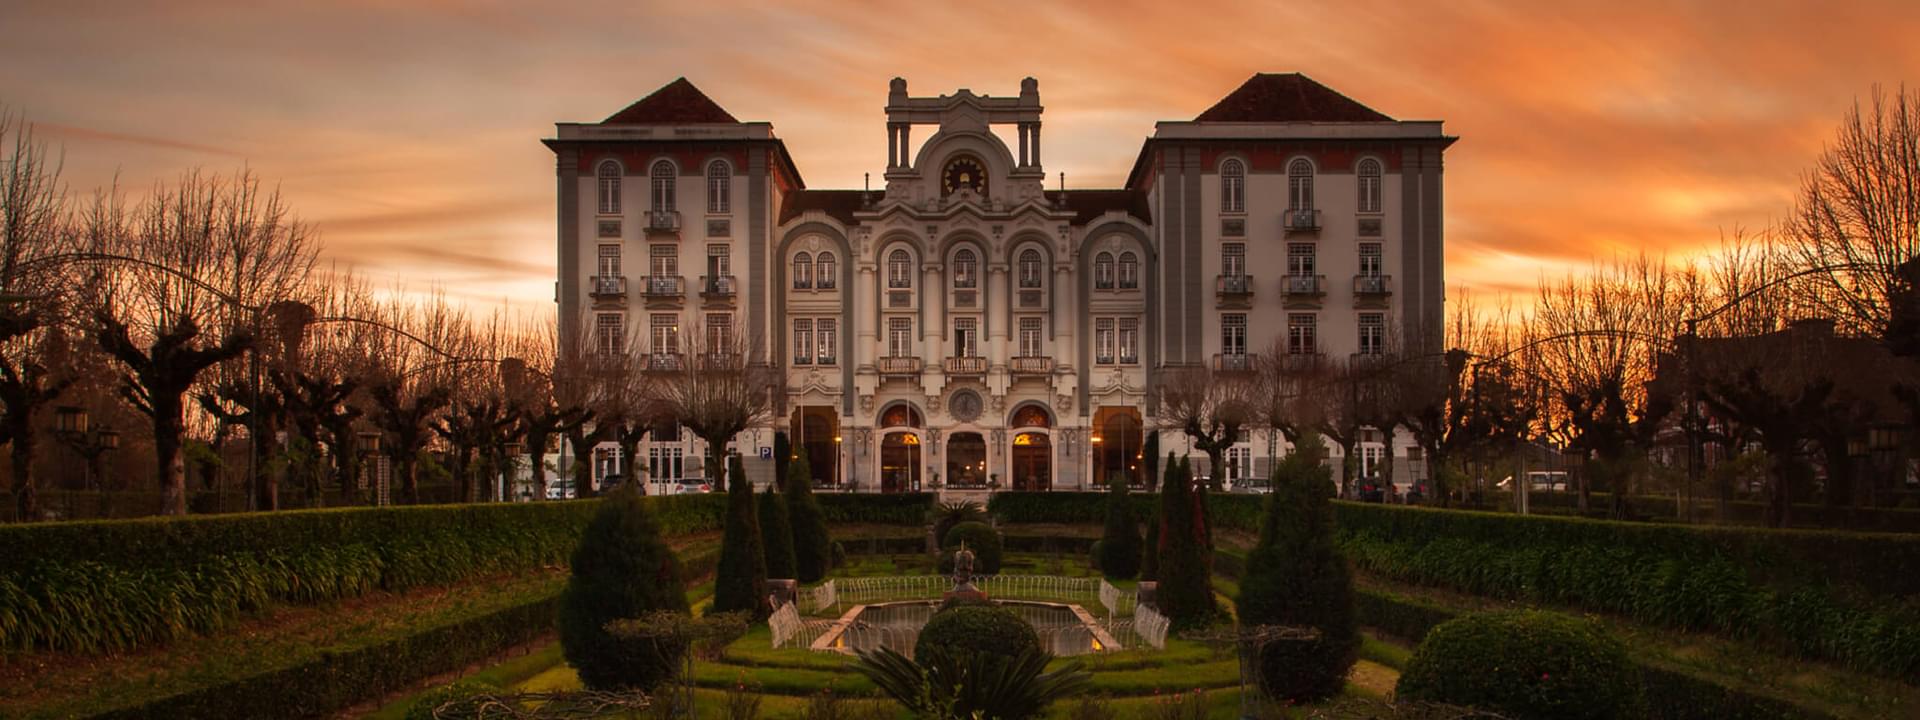 CURIA PALACE - Hotel, Spa & Golf